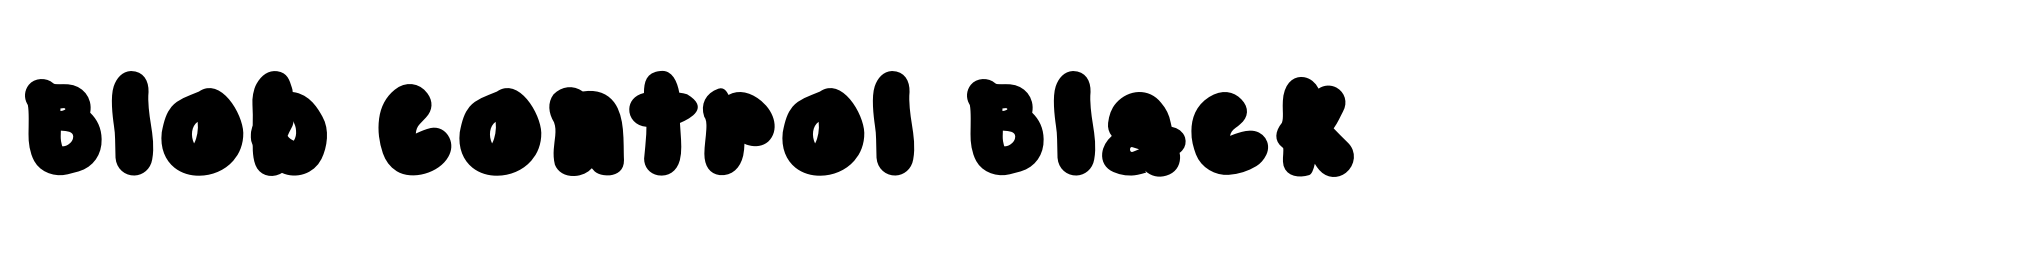 Blob Control Black image